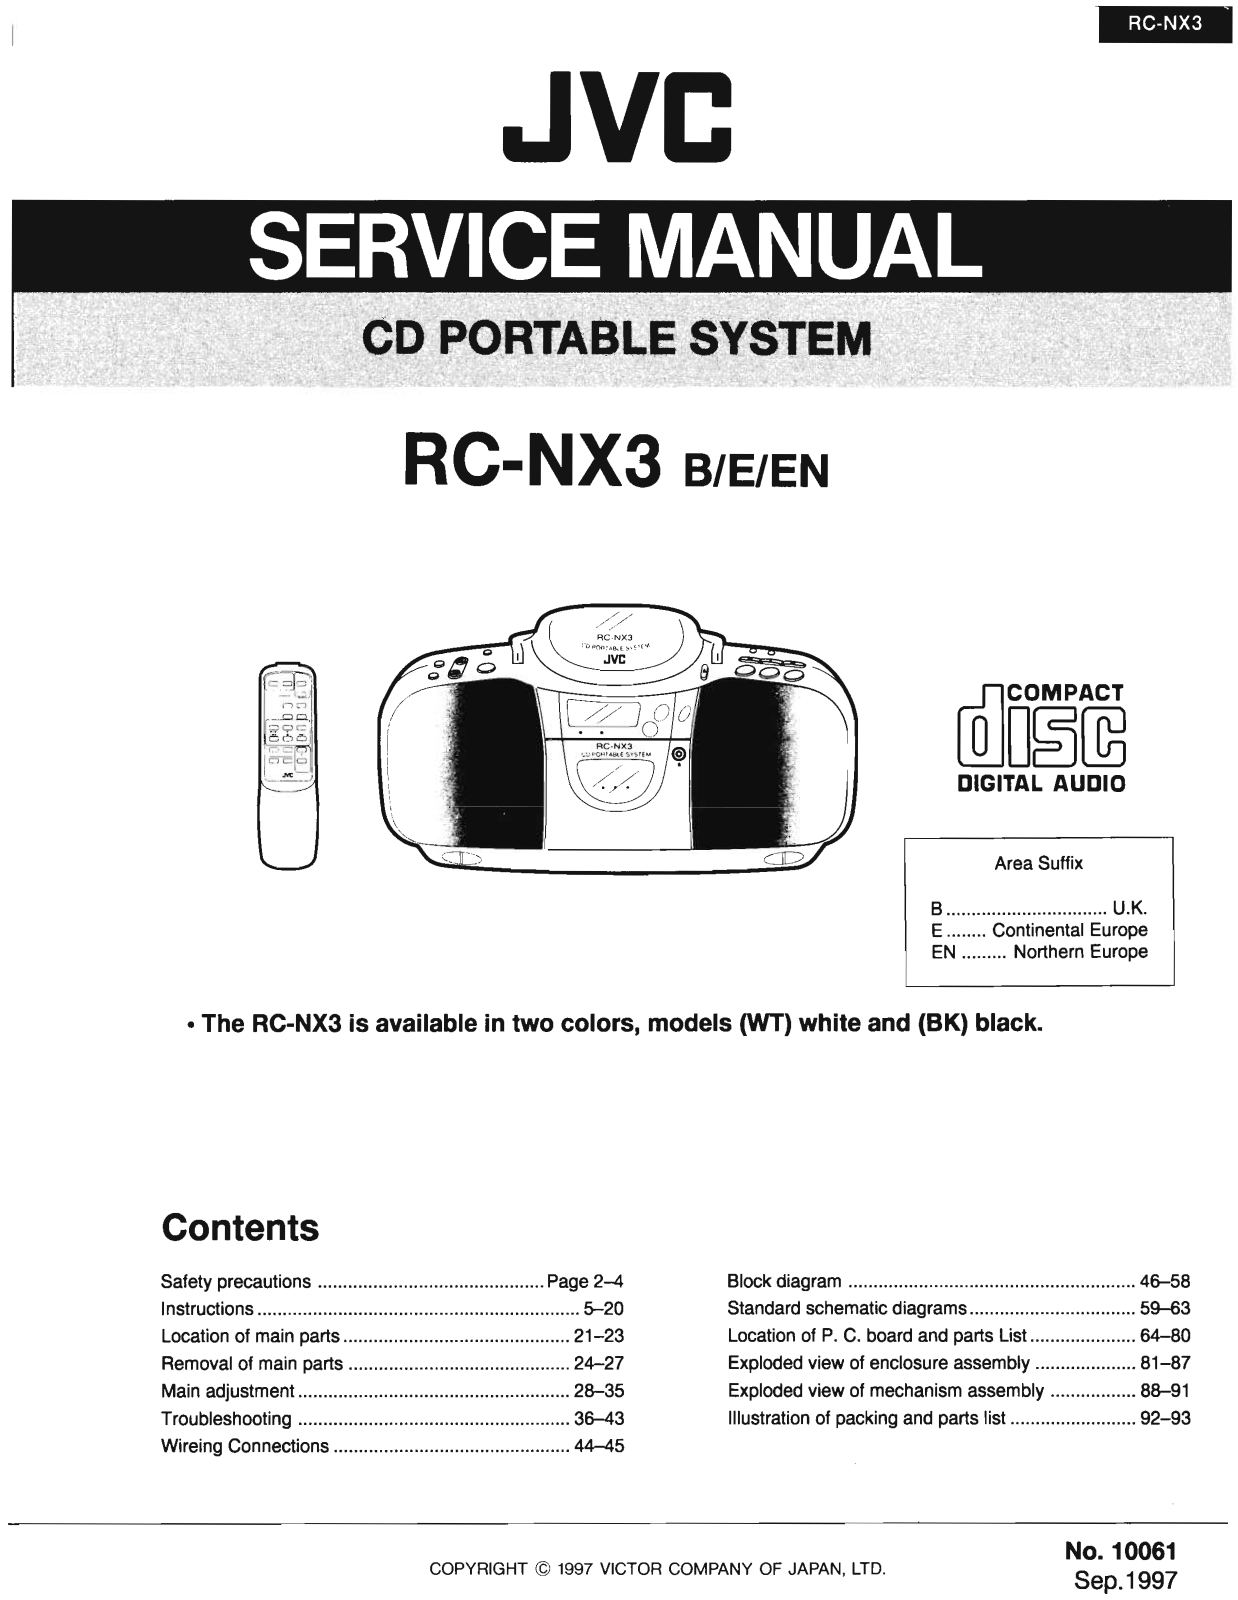 Jvc RC-NX3 Service Manual